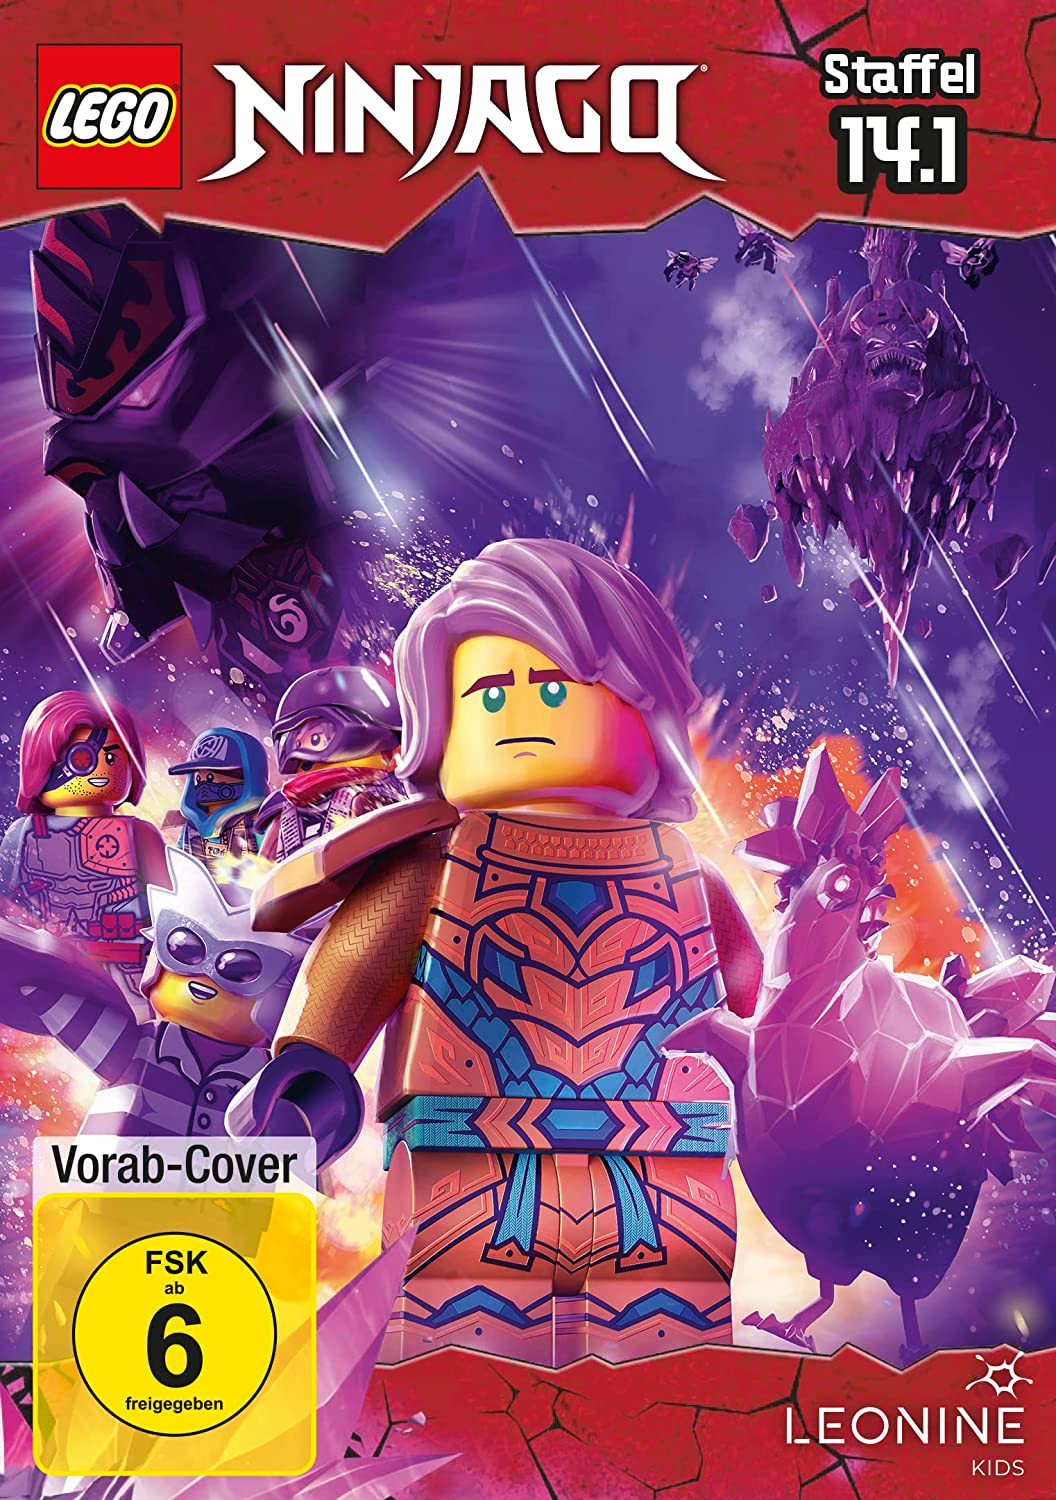 Lego Ninjago Staffel 14.1 (DVD)